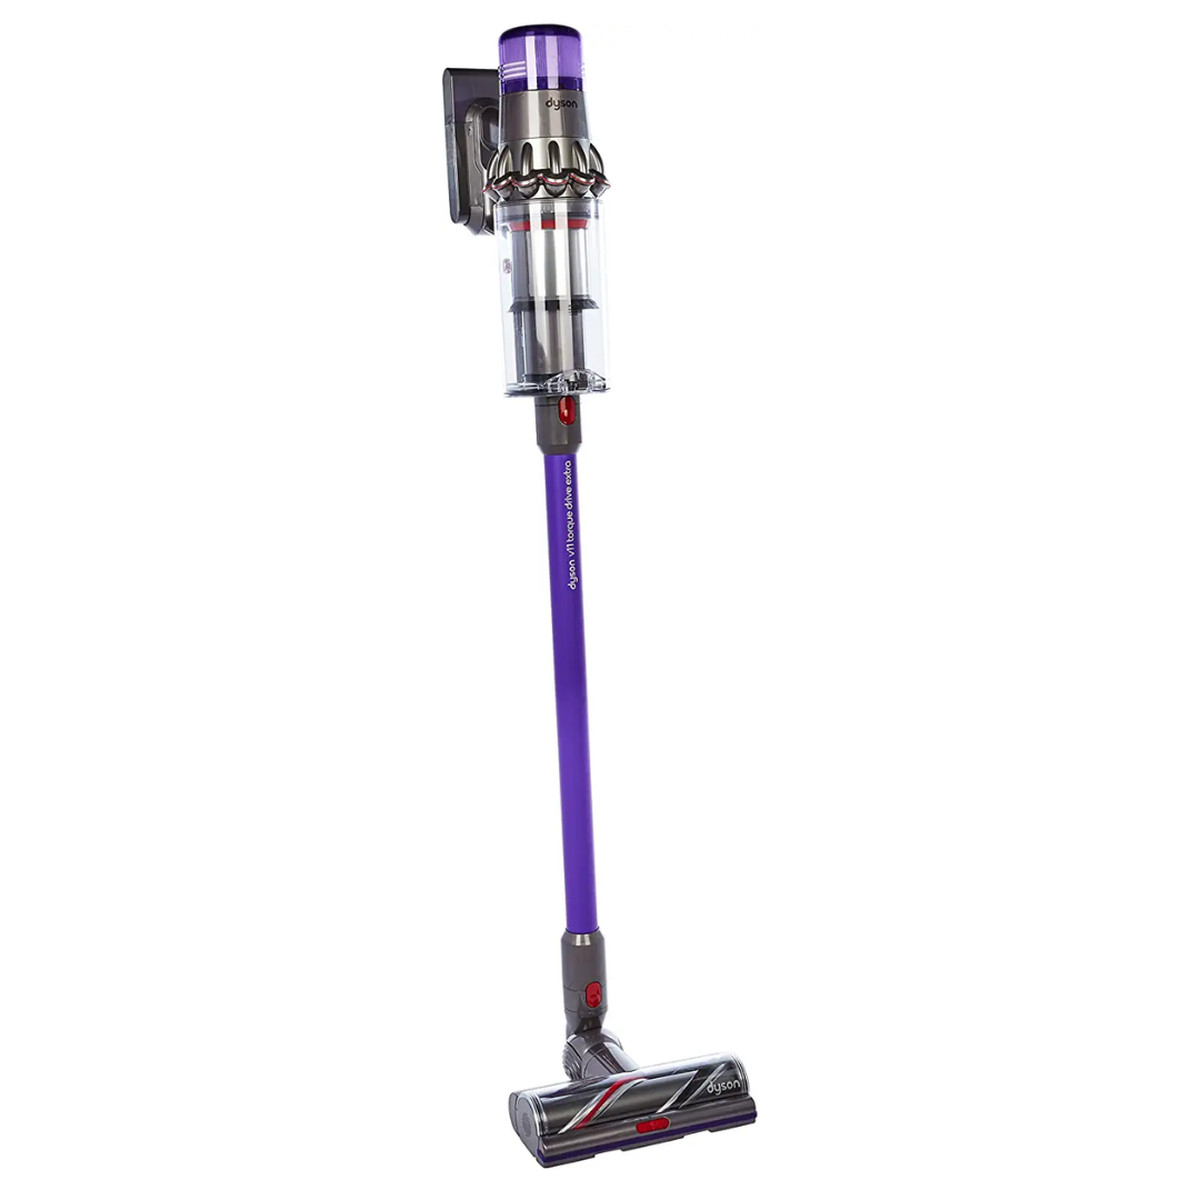 Most Versatile: Dyson V11 Cordless Vacuum Cleaner